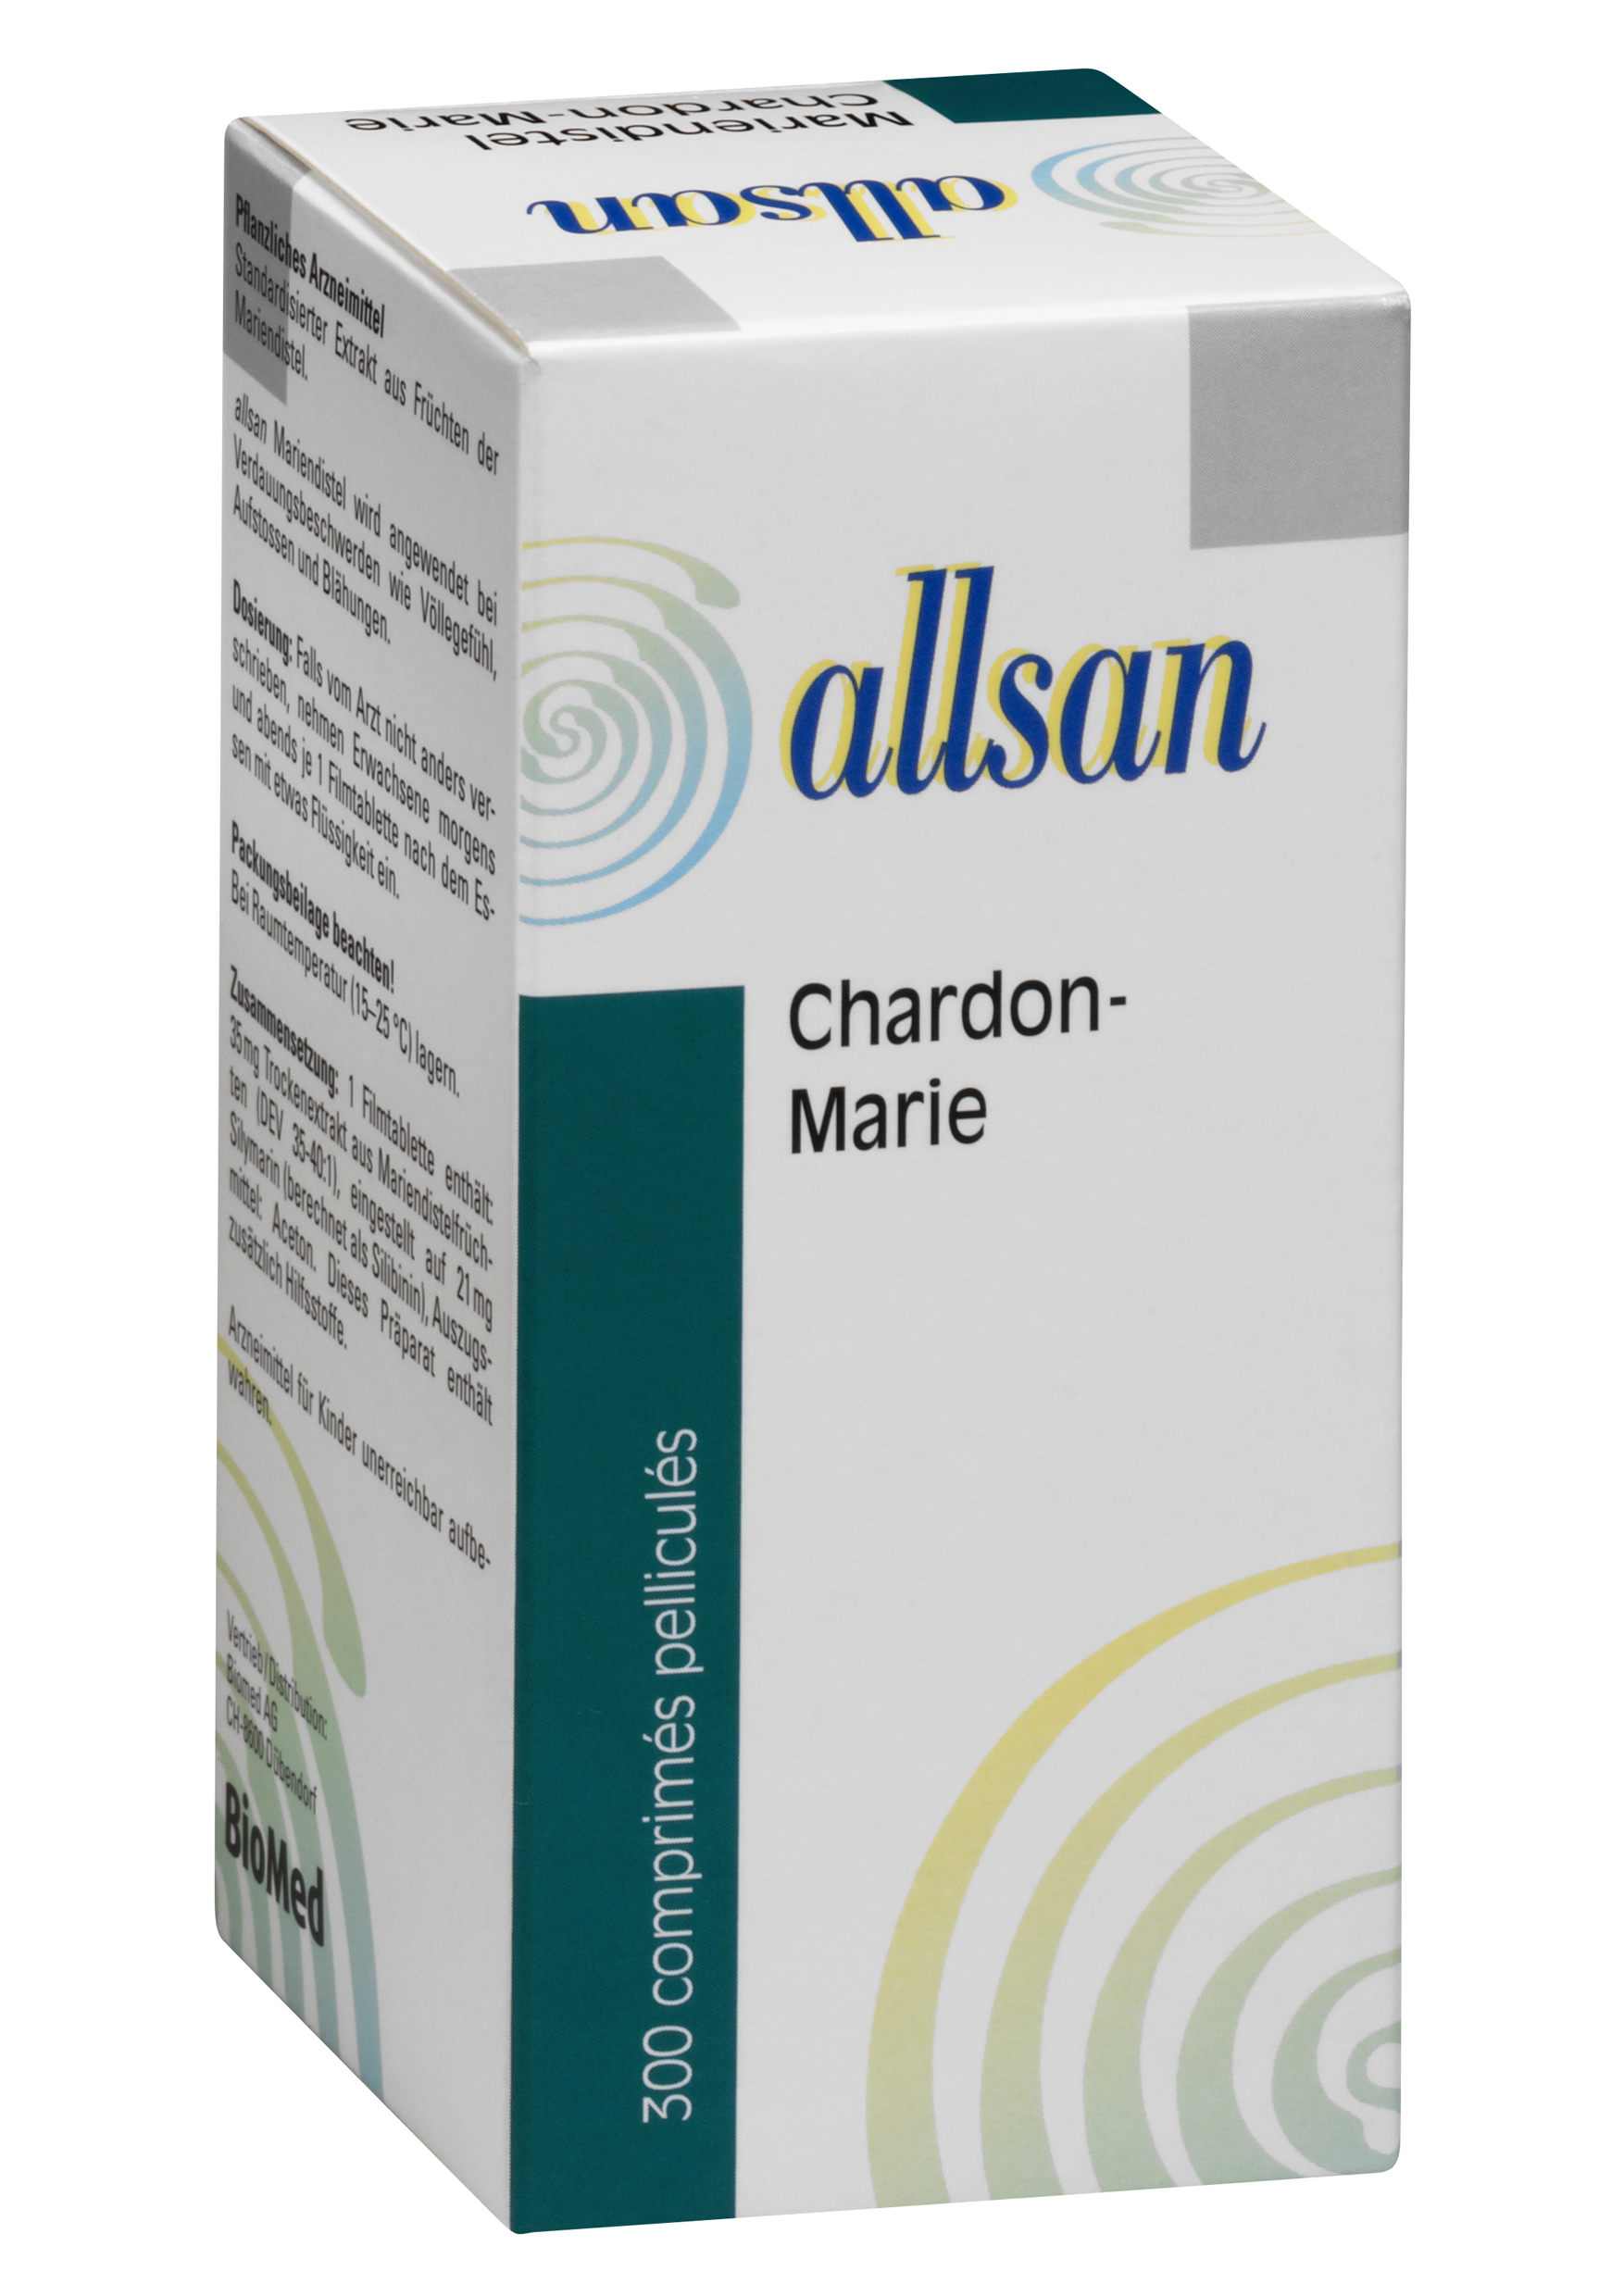 Allsan Chardon-Marie